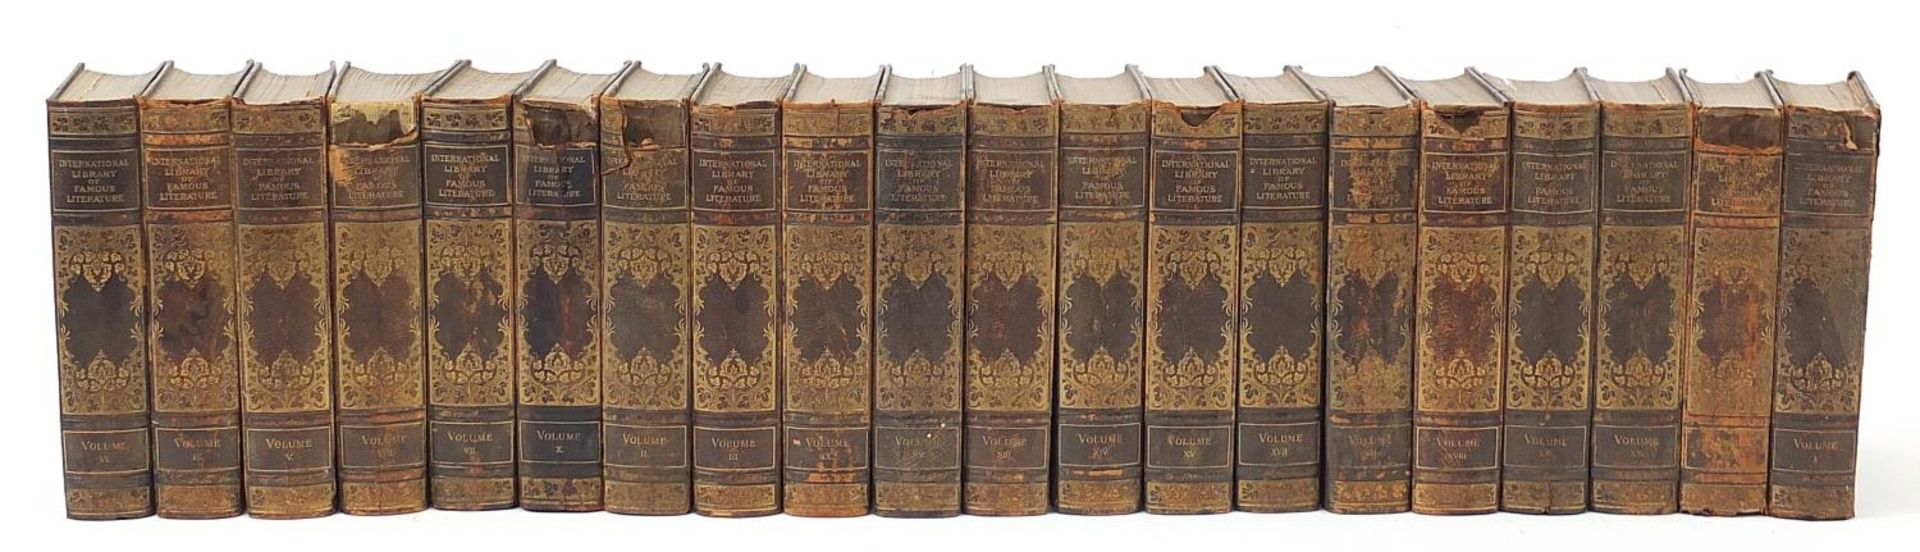 International Library of Famous Literature, twenty 19th century leather bound hardback books